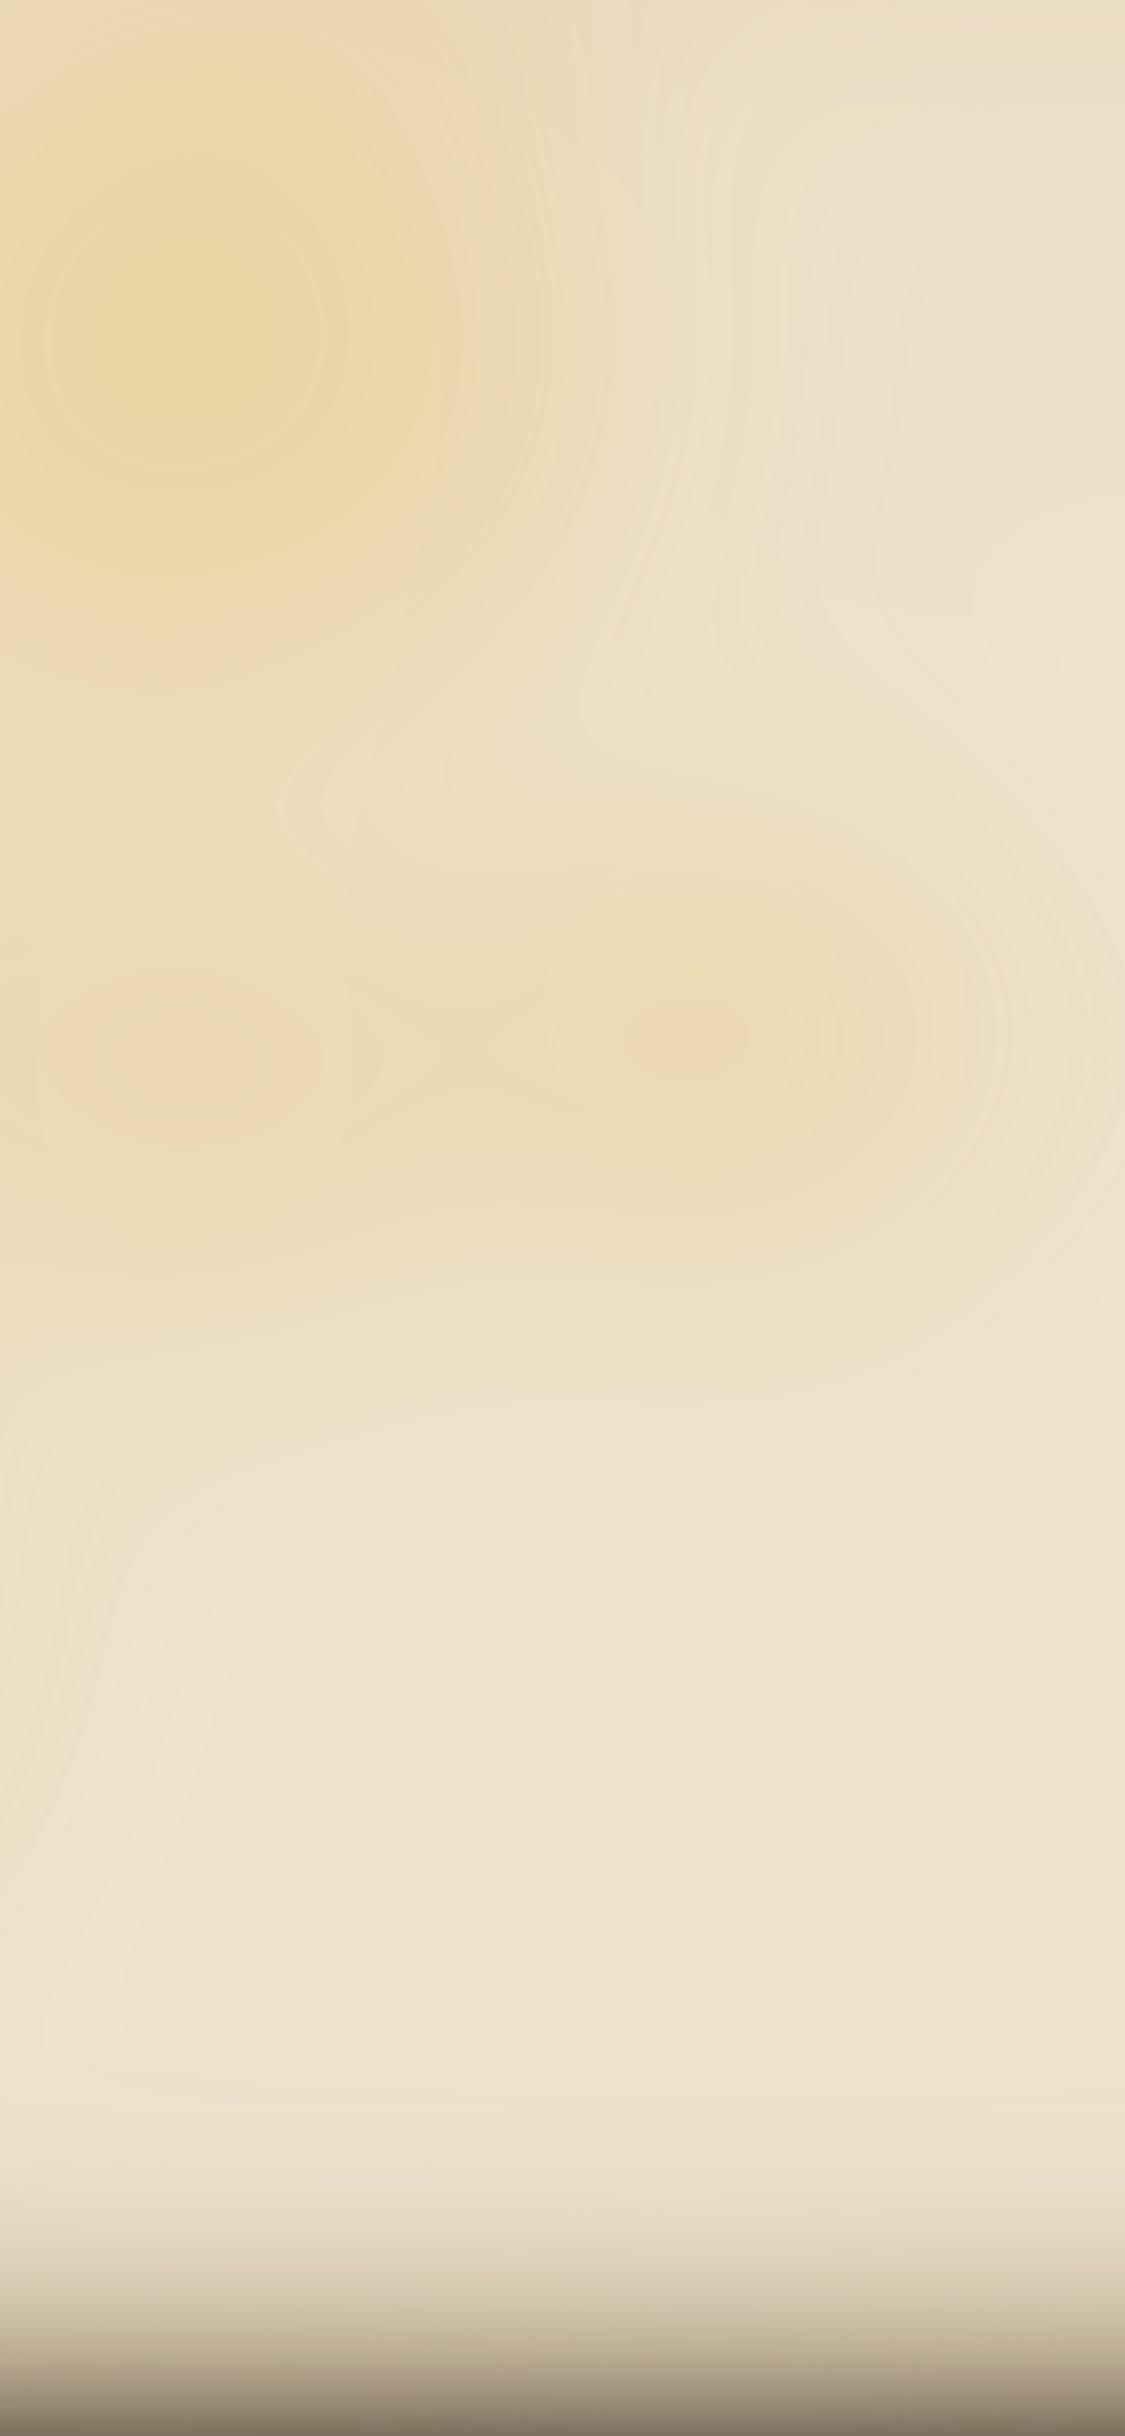 iPhone X wallpaper. champagne gold yellow gradation blur